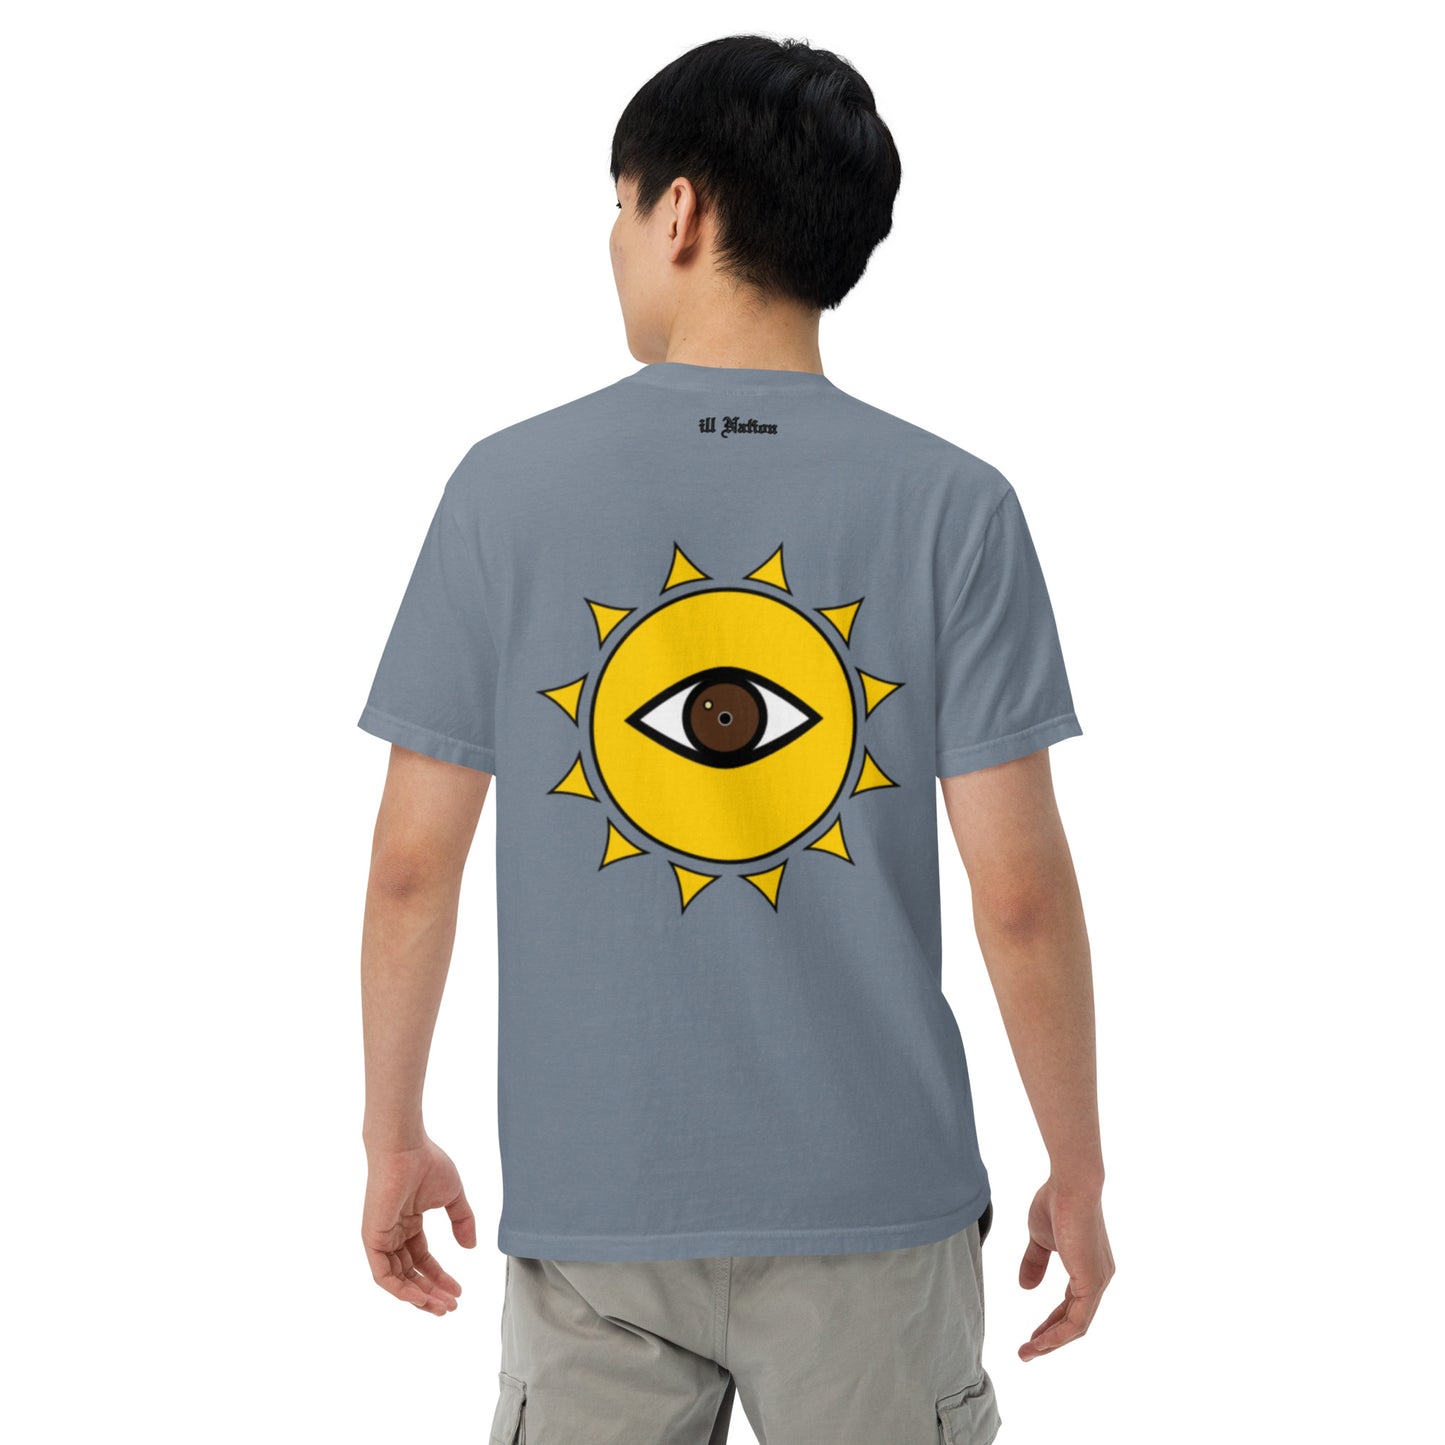 illNation “Sun=Vision” Graphic Tee